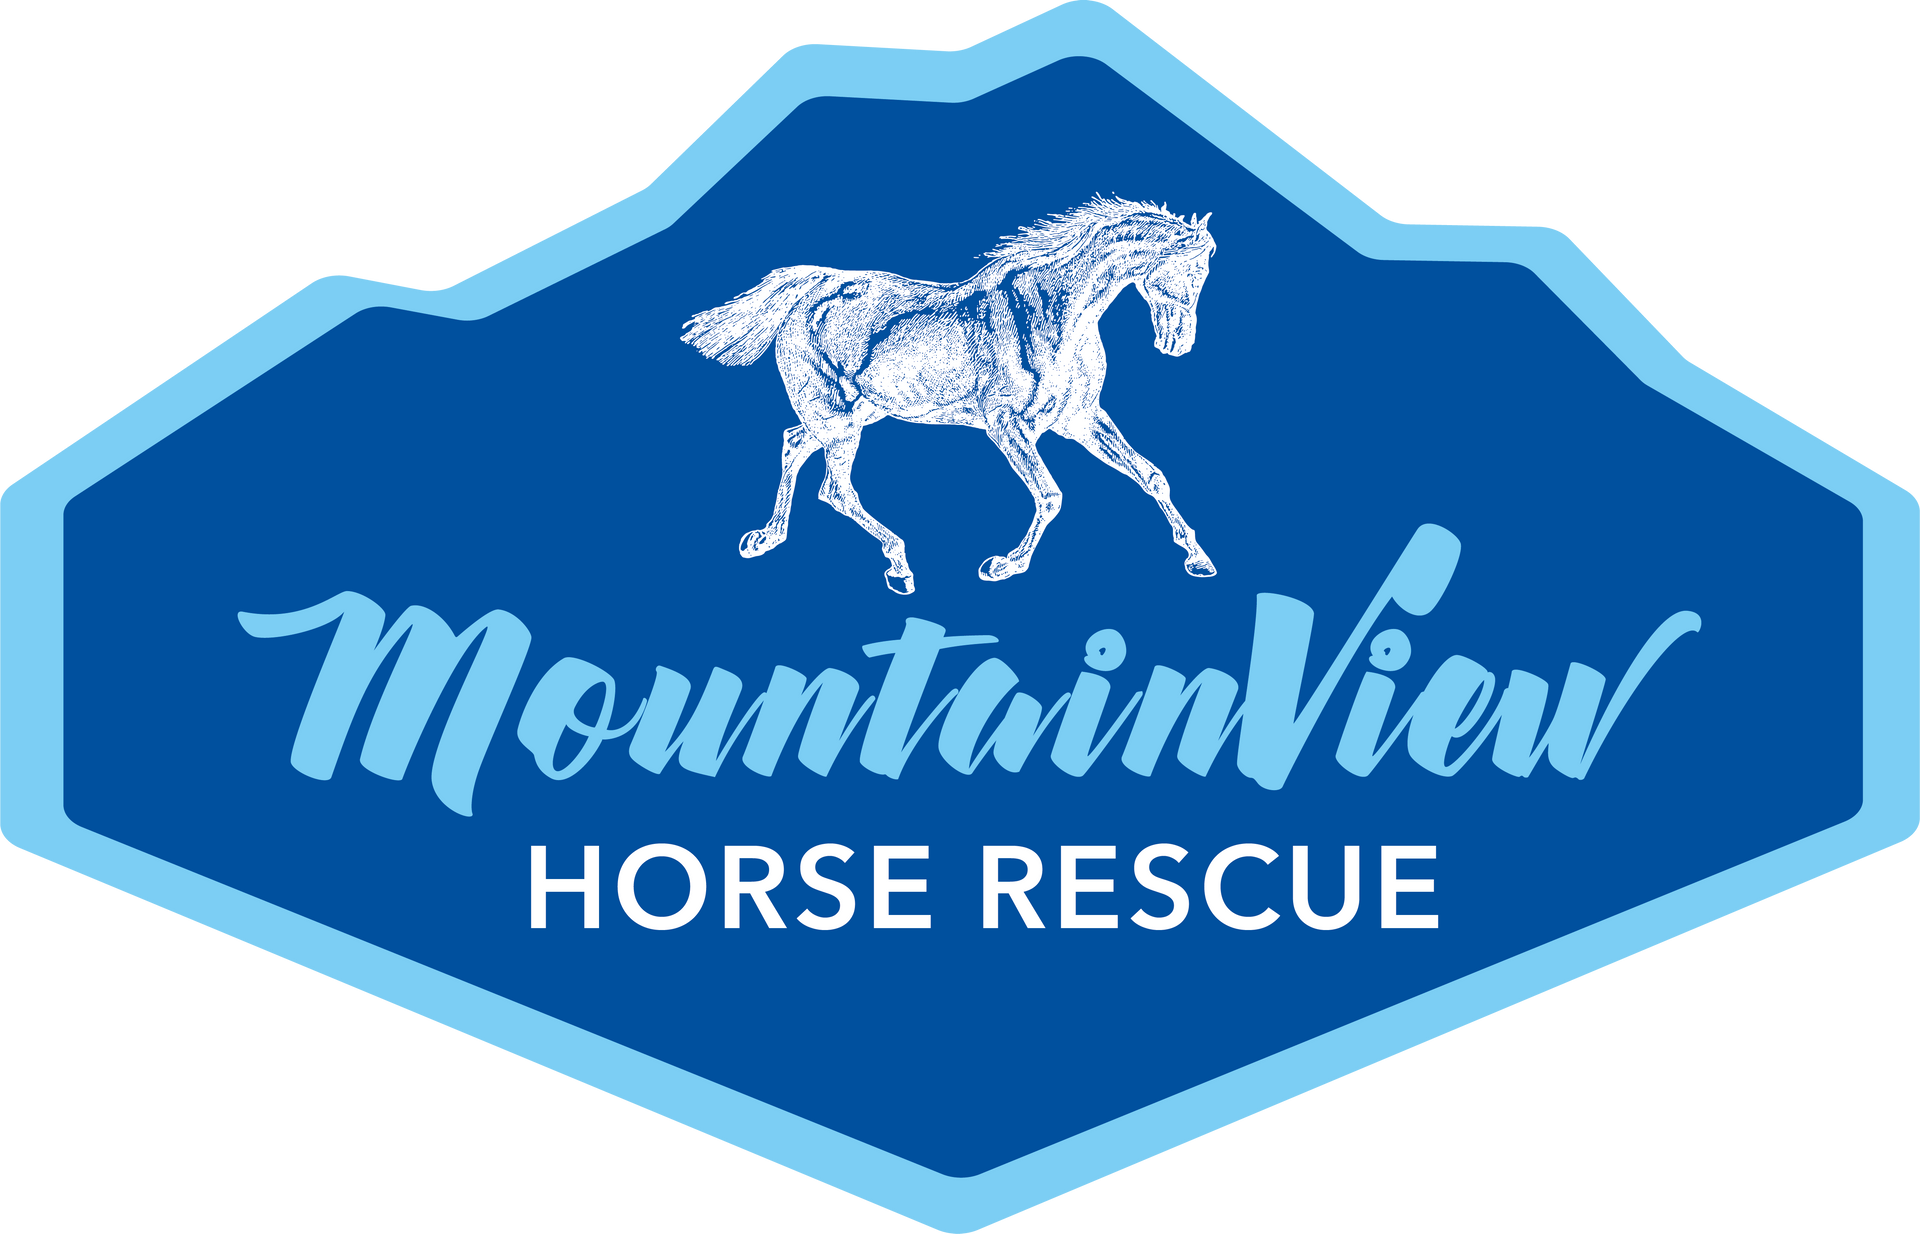 MountainView Horse Rescue logo